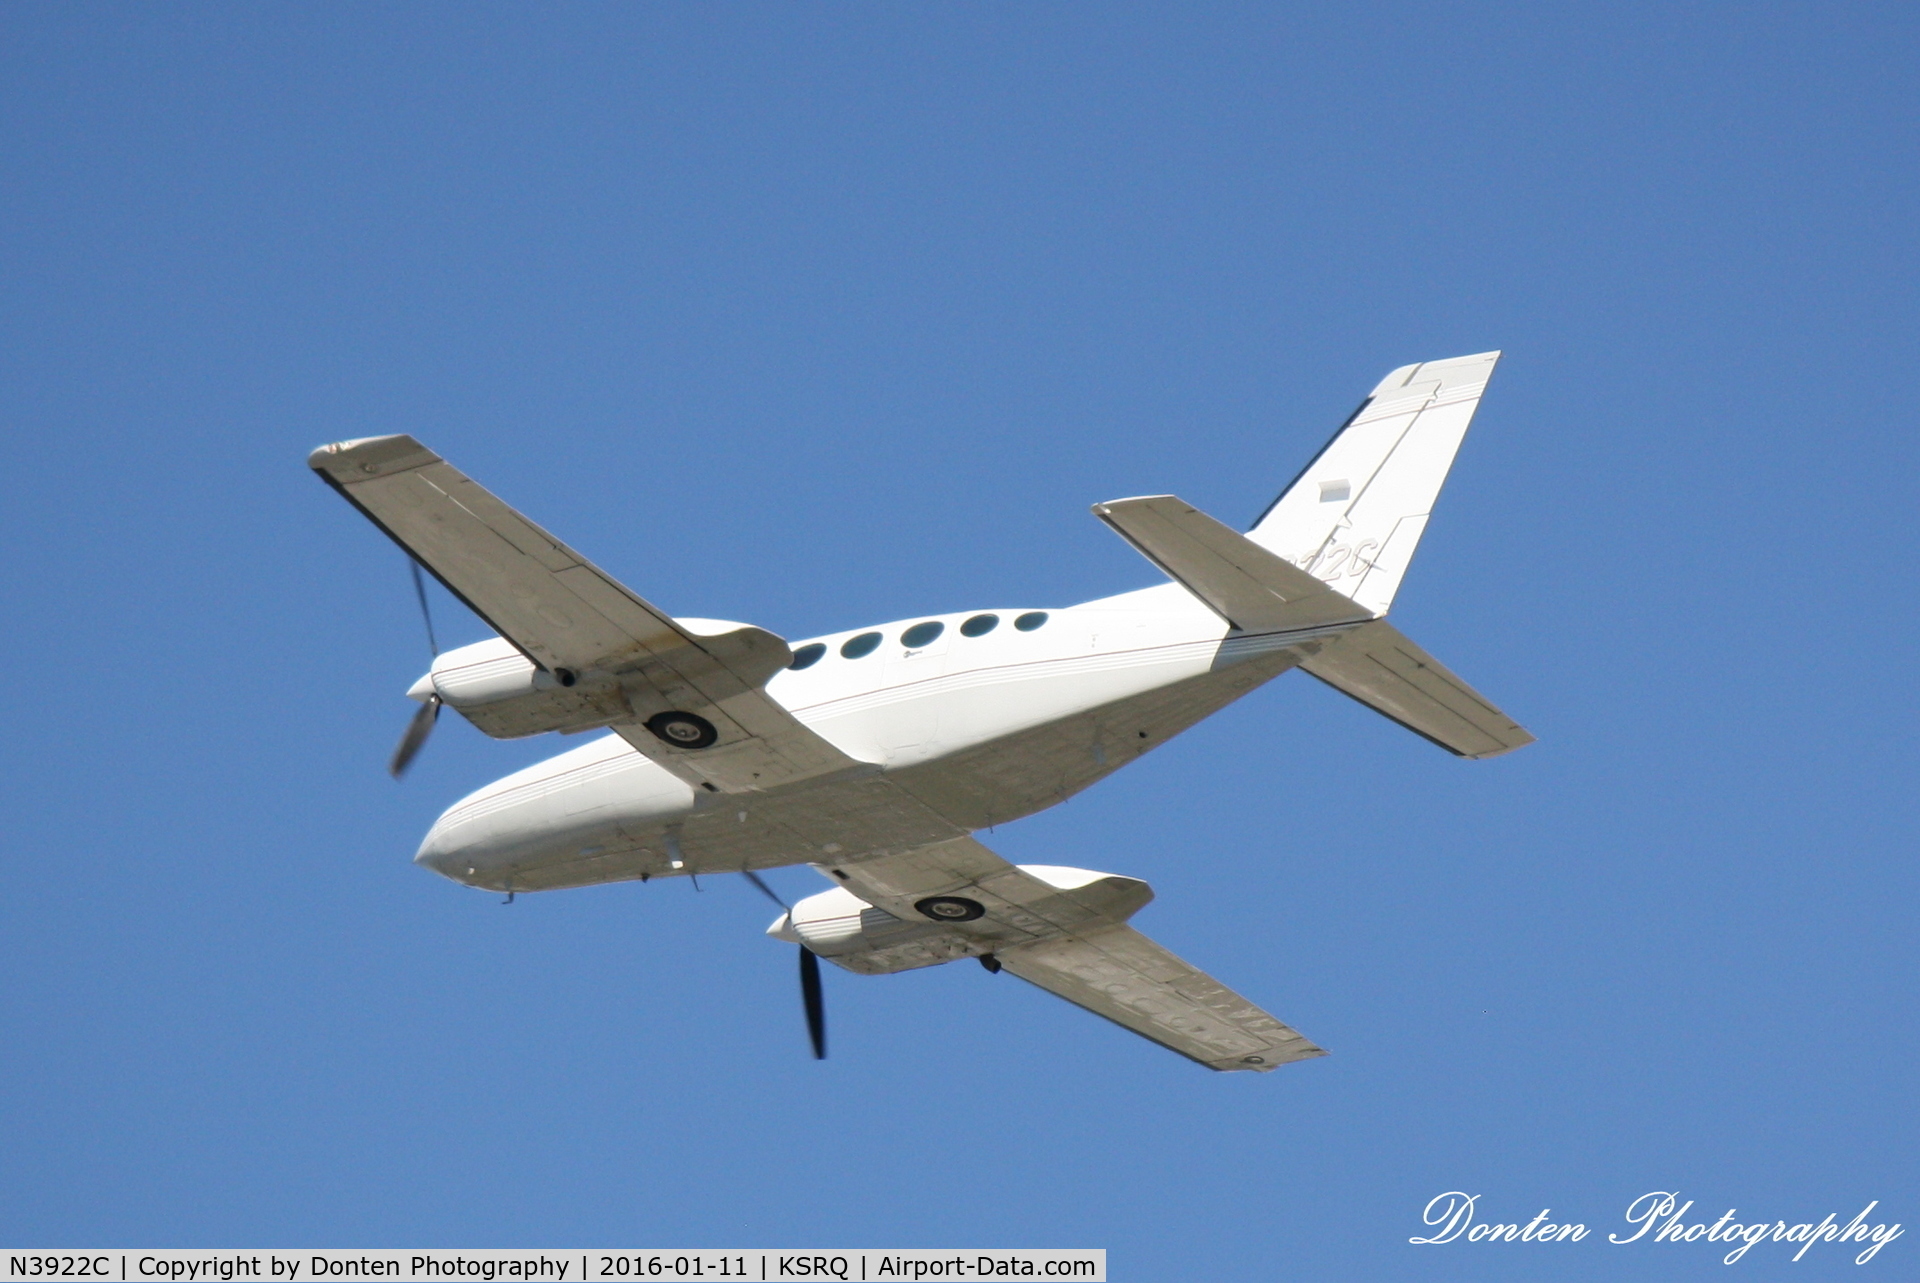 N3922C, 1977 Cessna 421C Golden Eagle C/N 421C0419, Cessna 421 (N3922C) departs Sarasota-Bradenton International Airport enroute to Fulton County Airport